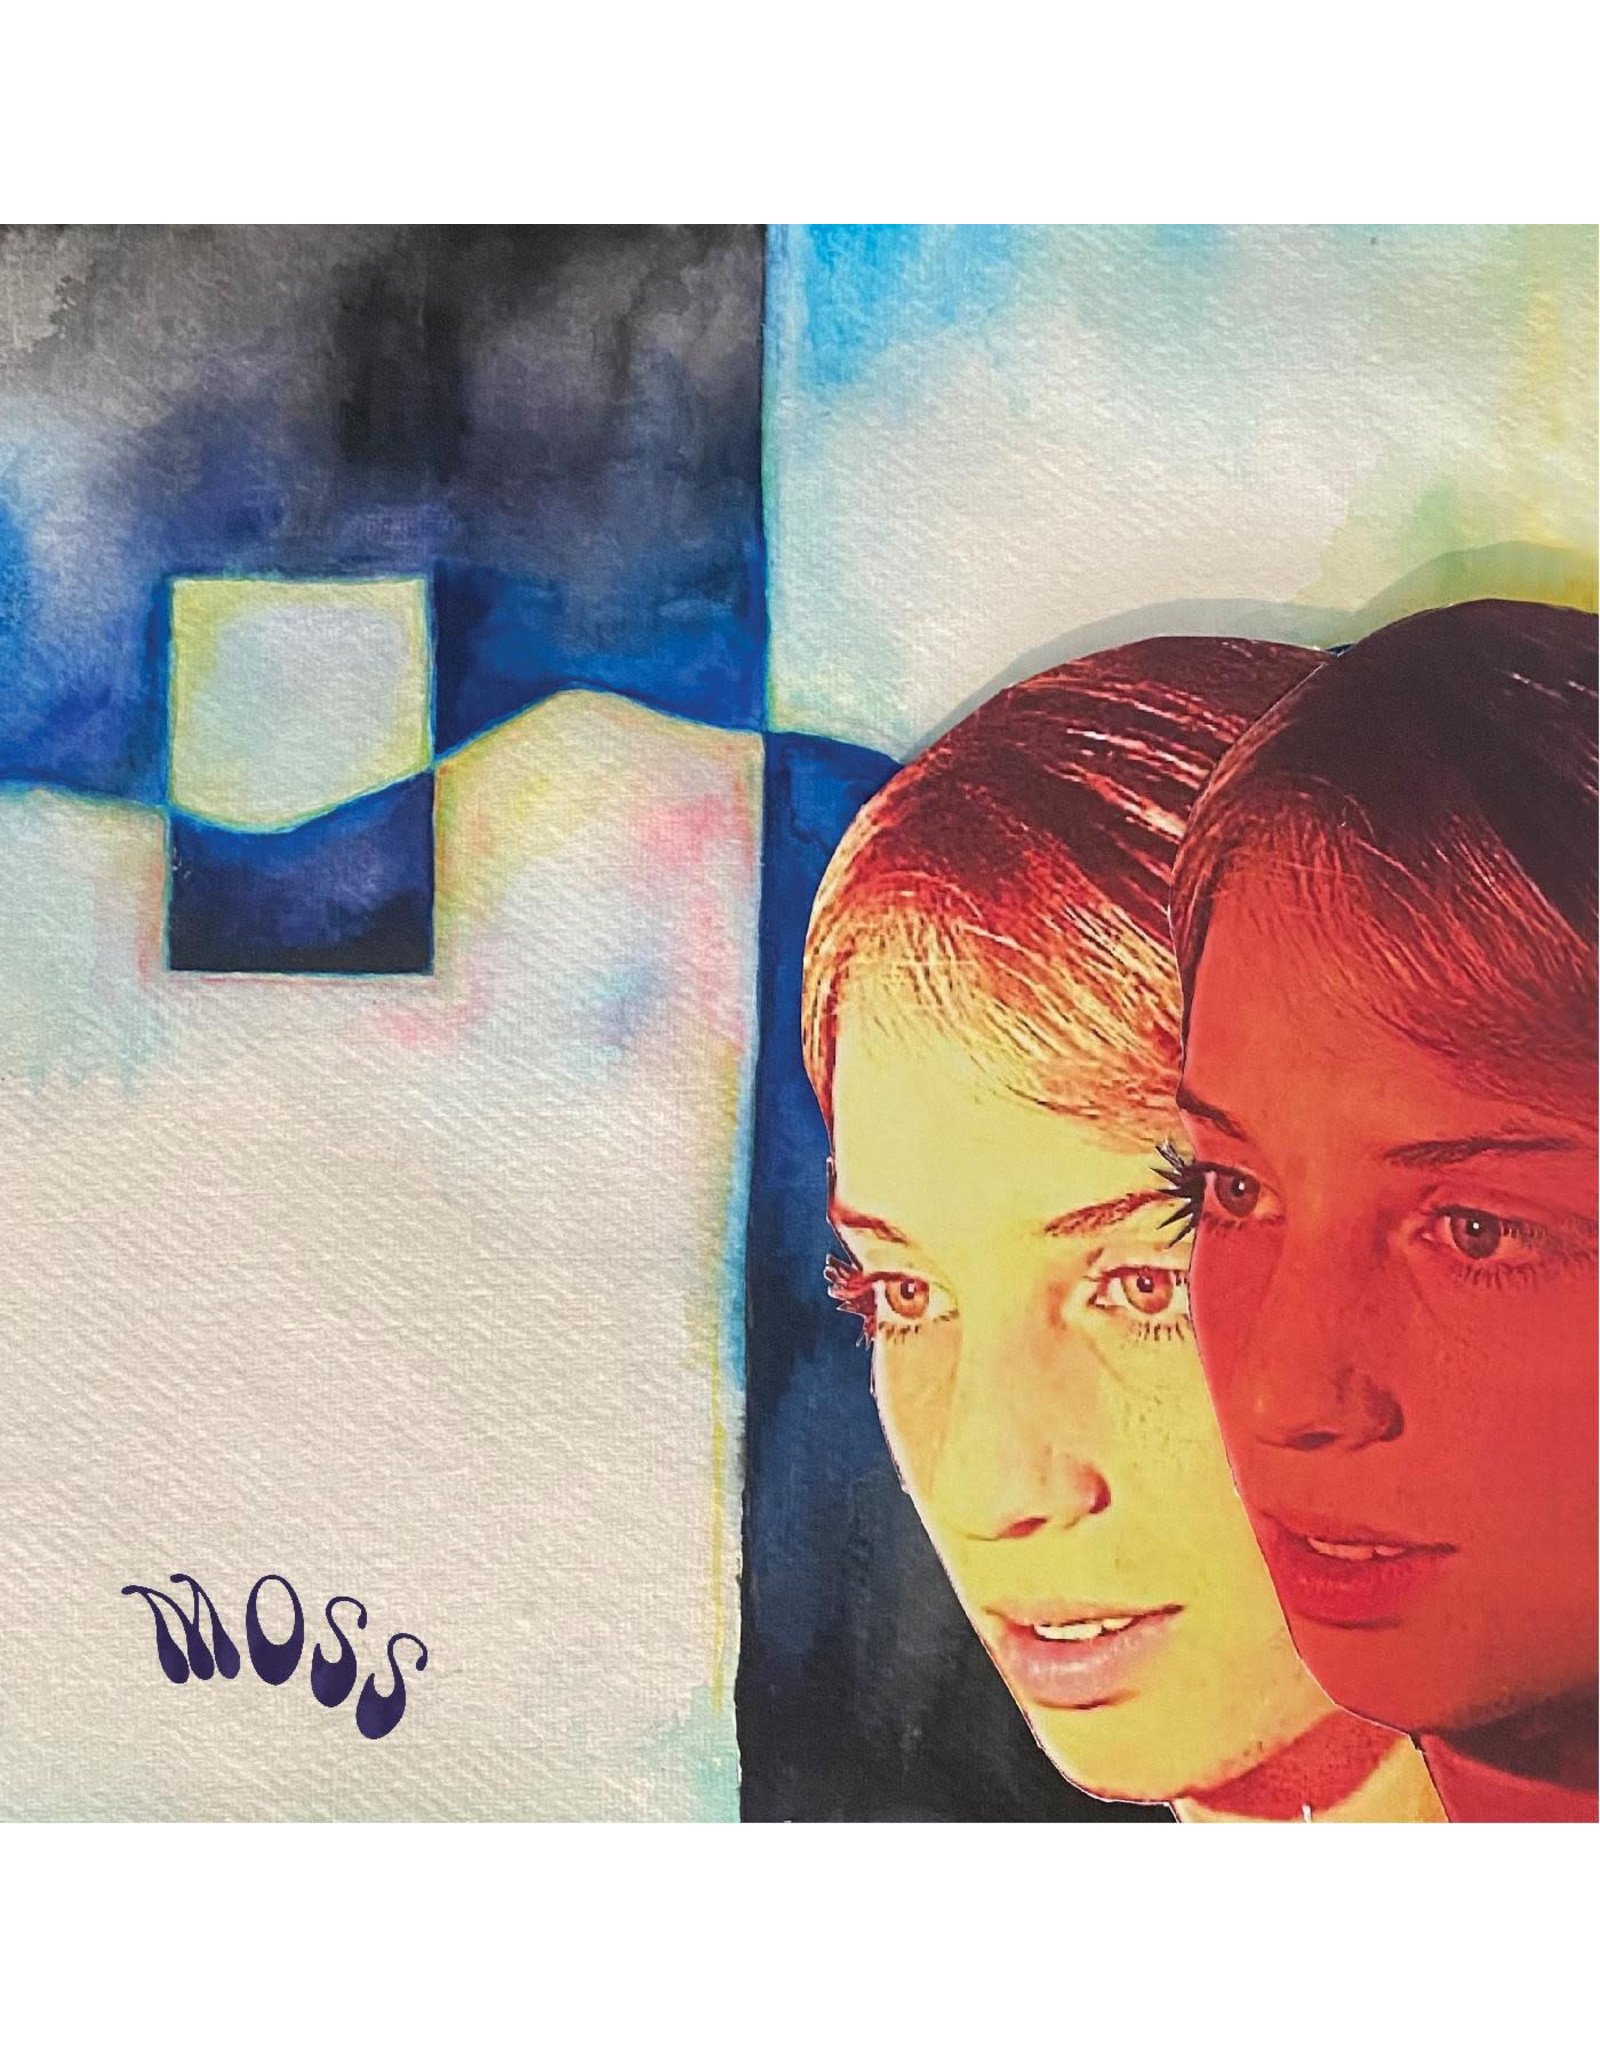 Maya Hawke - Moss (Translucent Orange Vinyl)